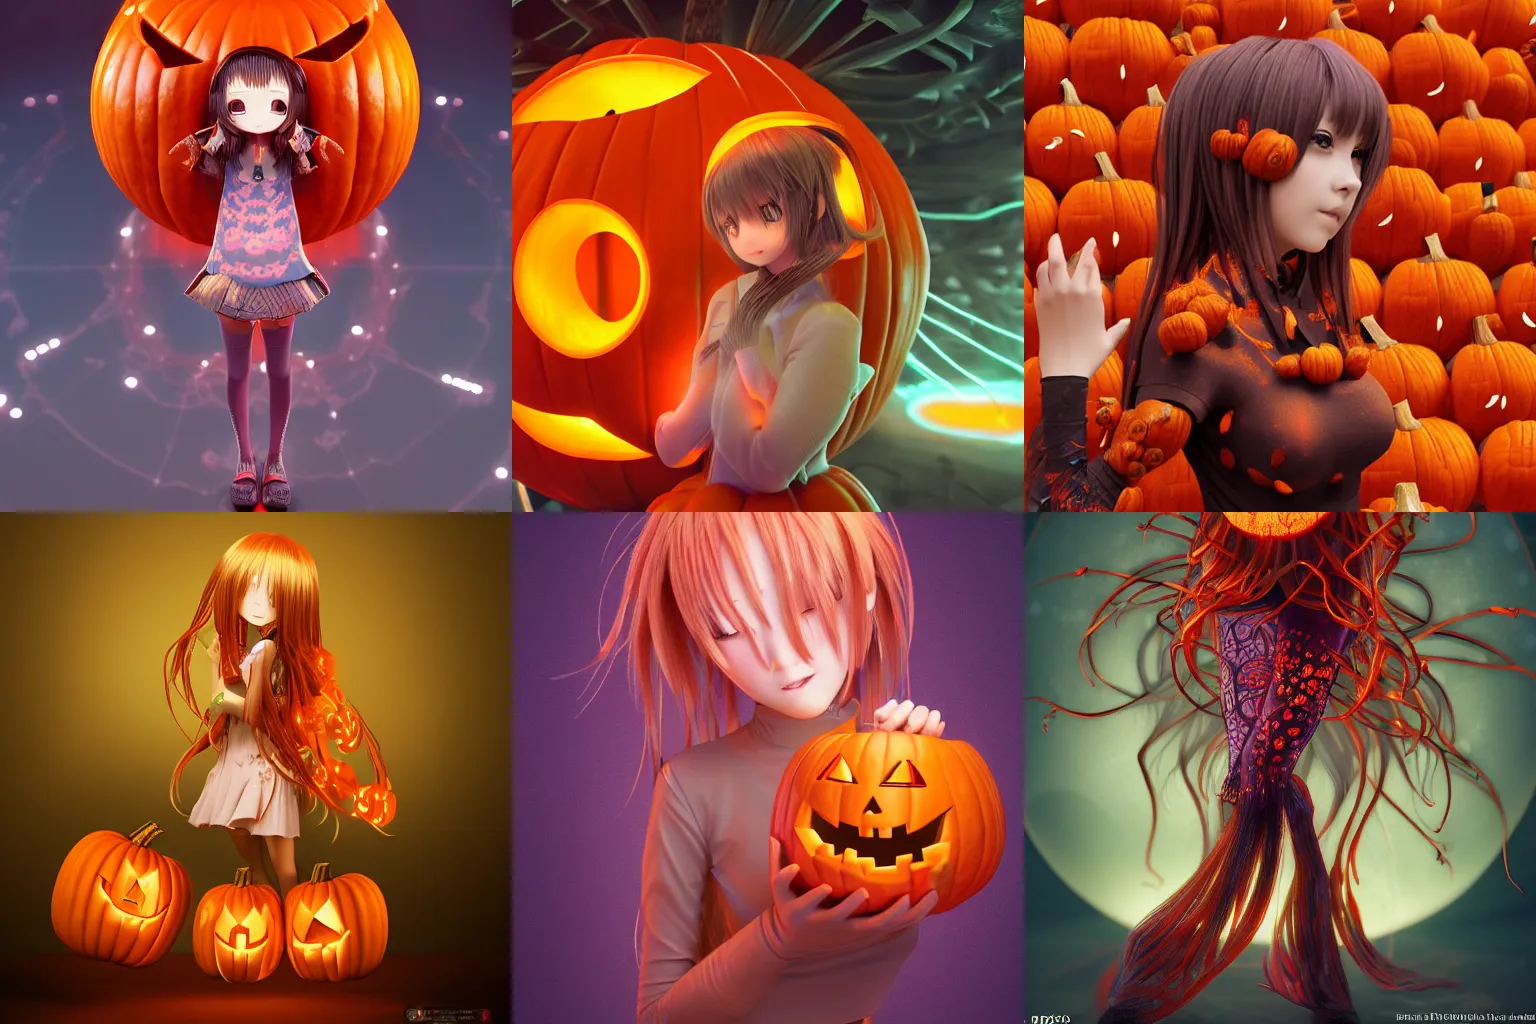 Pumpkin Head & Girl, a card pack by Gabychii - INPRNT